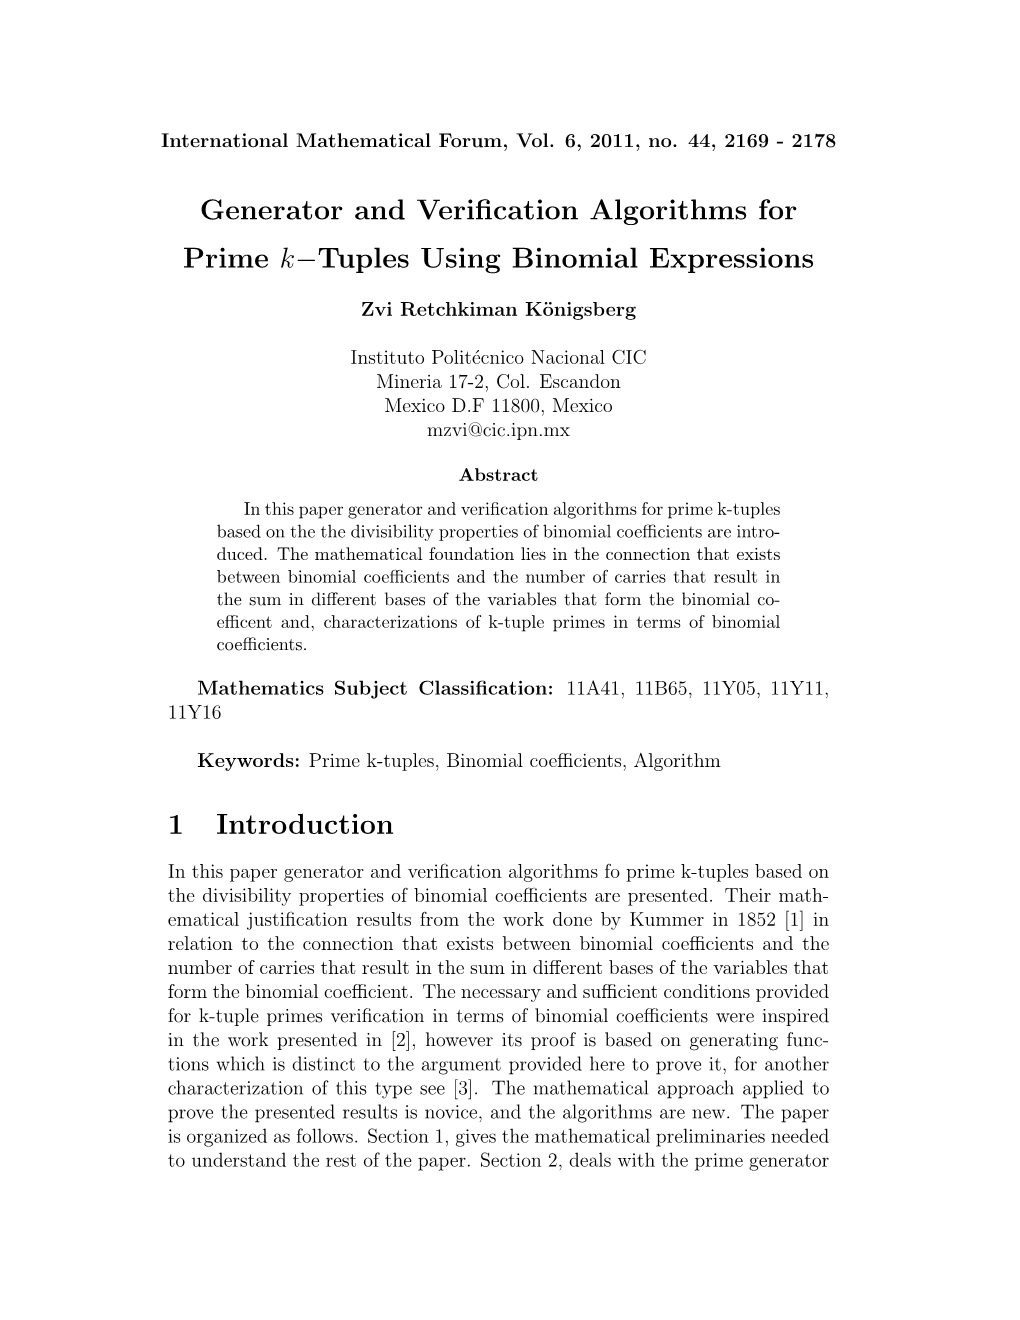 Generator and Verification Algorithms for Prime K−Tuples Using Binomial